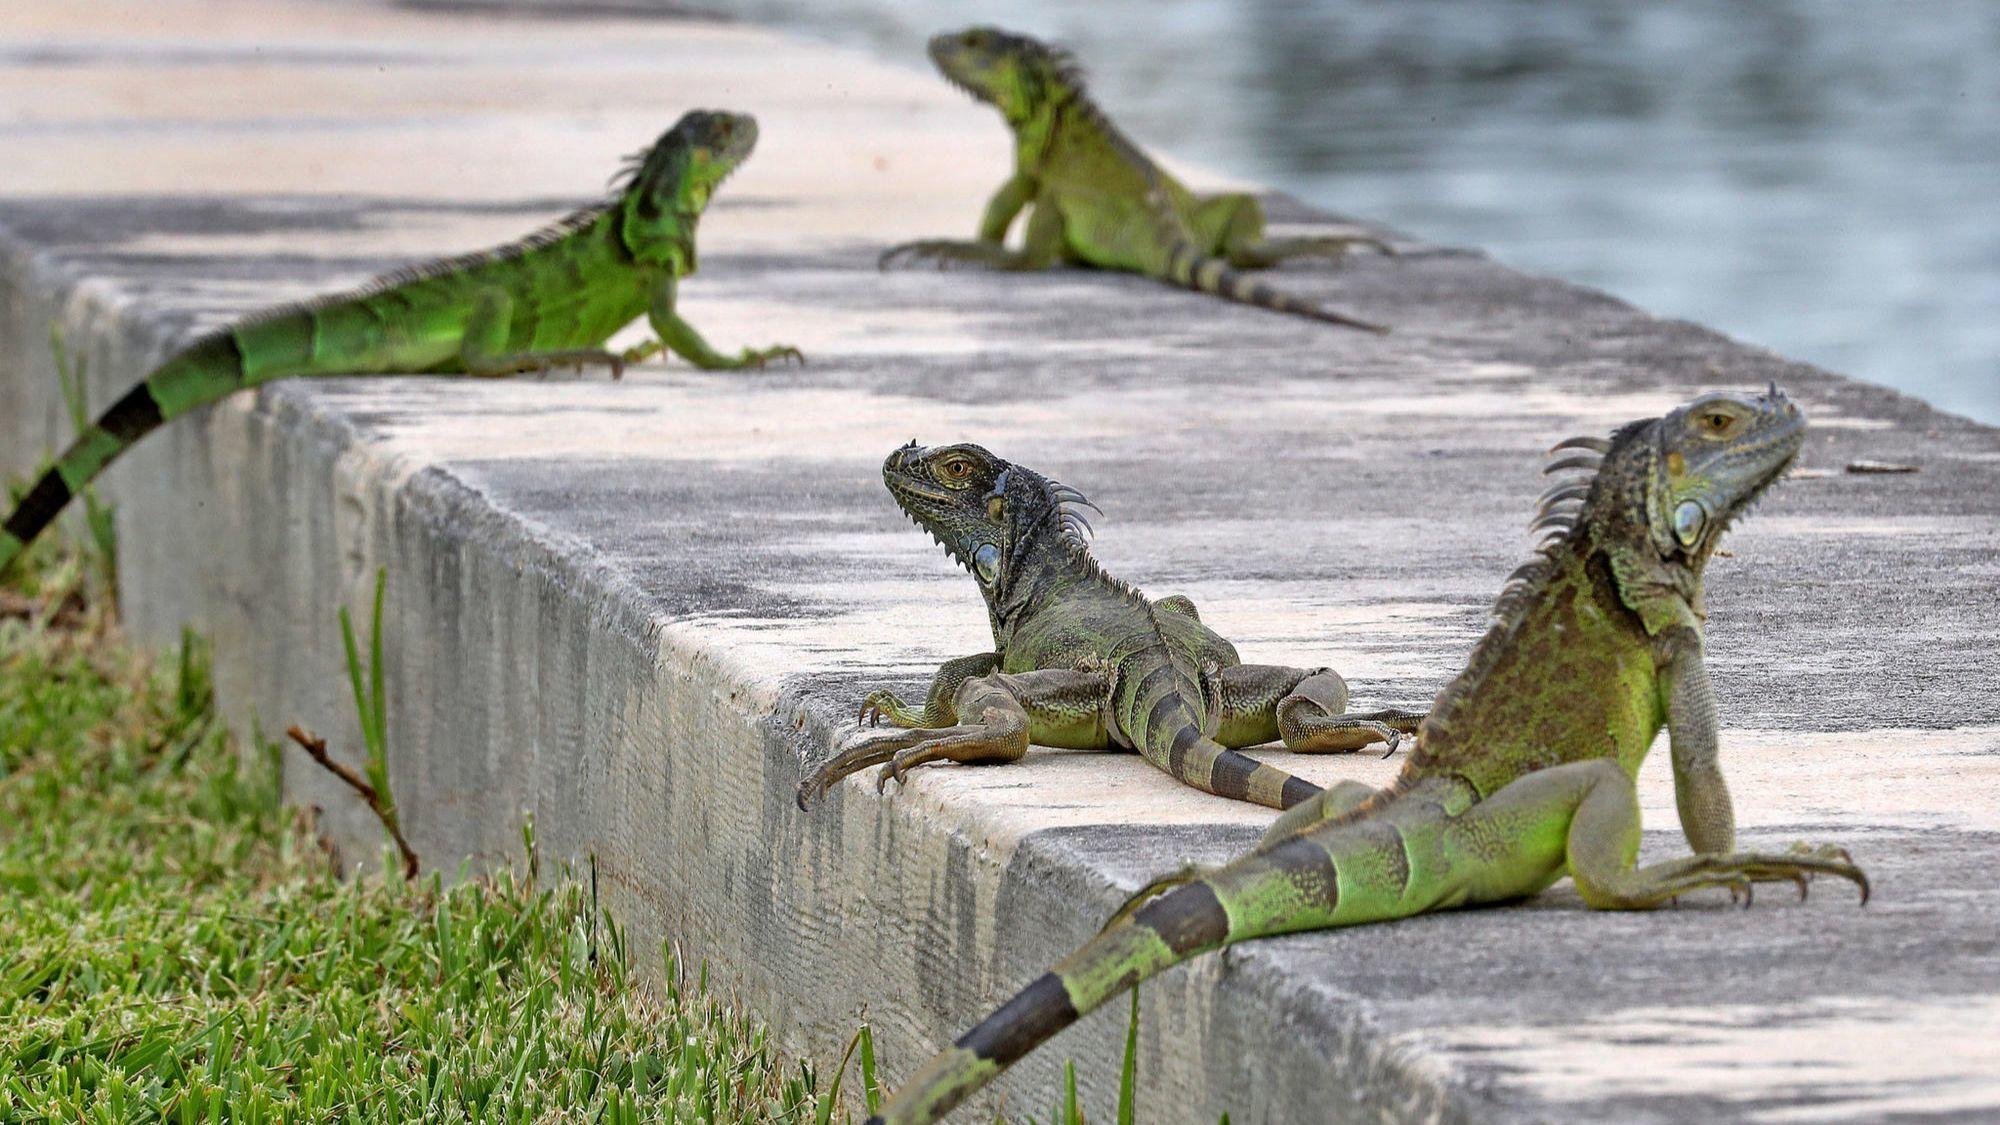 Out of control iguanas infesting South Florida - The San Diego Union-Tribune